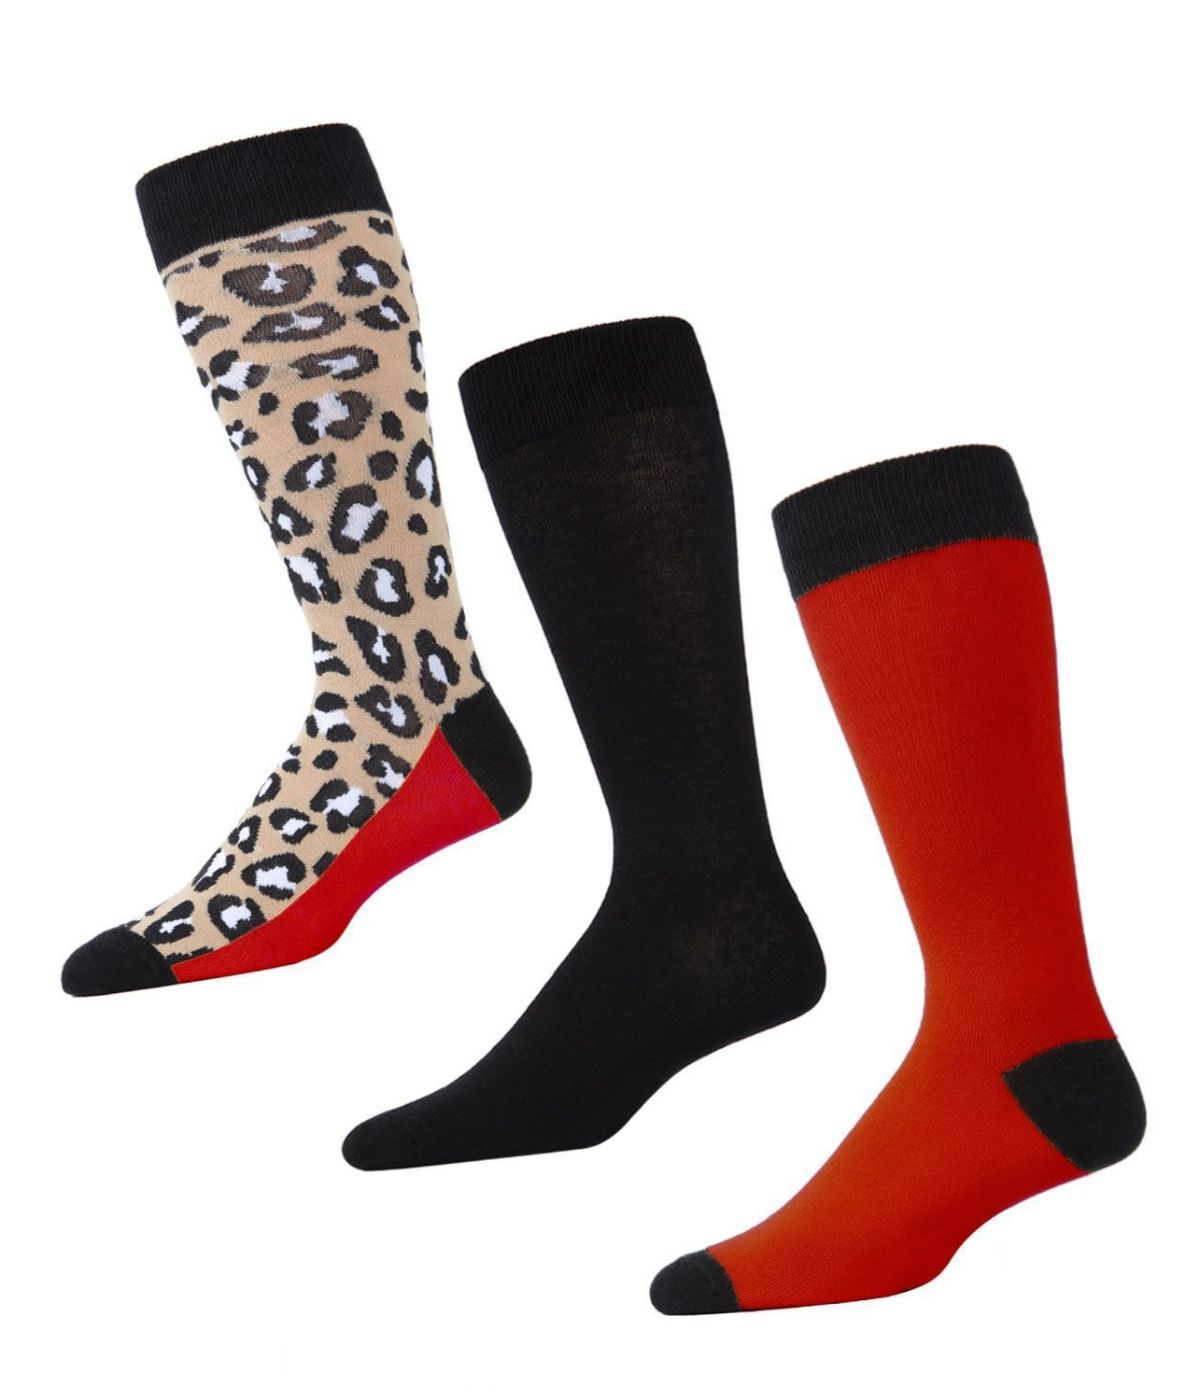 Leopard Pane Cotton Blend Crew Sock 3 Pack Black-Chili